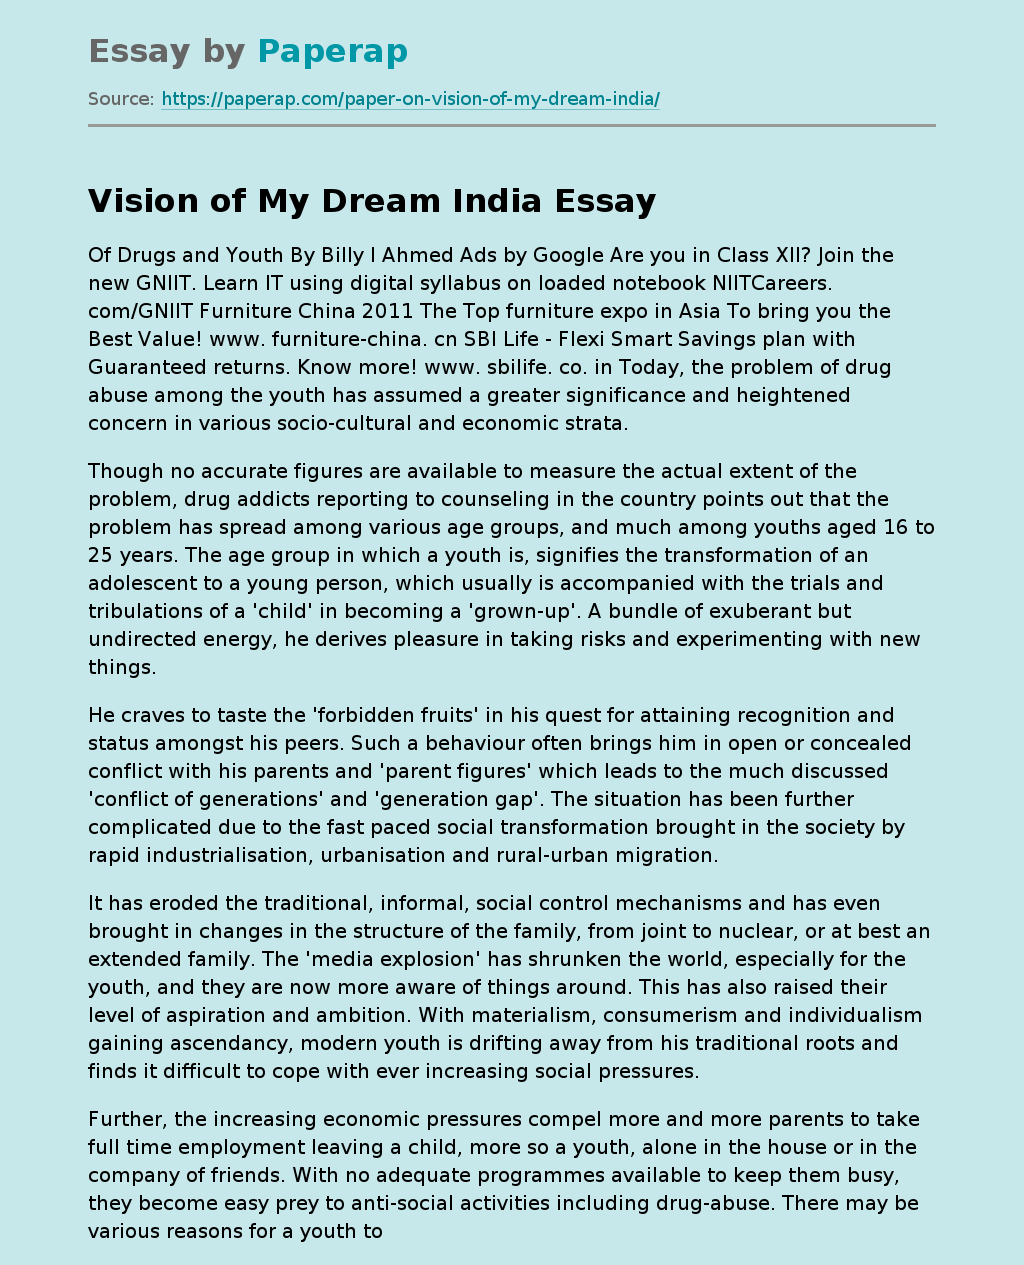 Vision of My Dream India